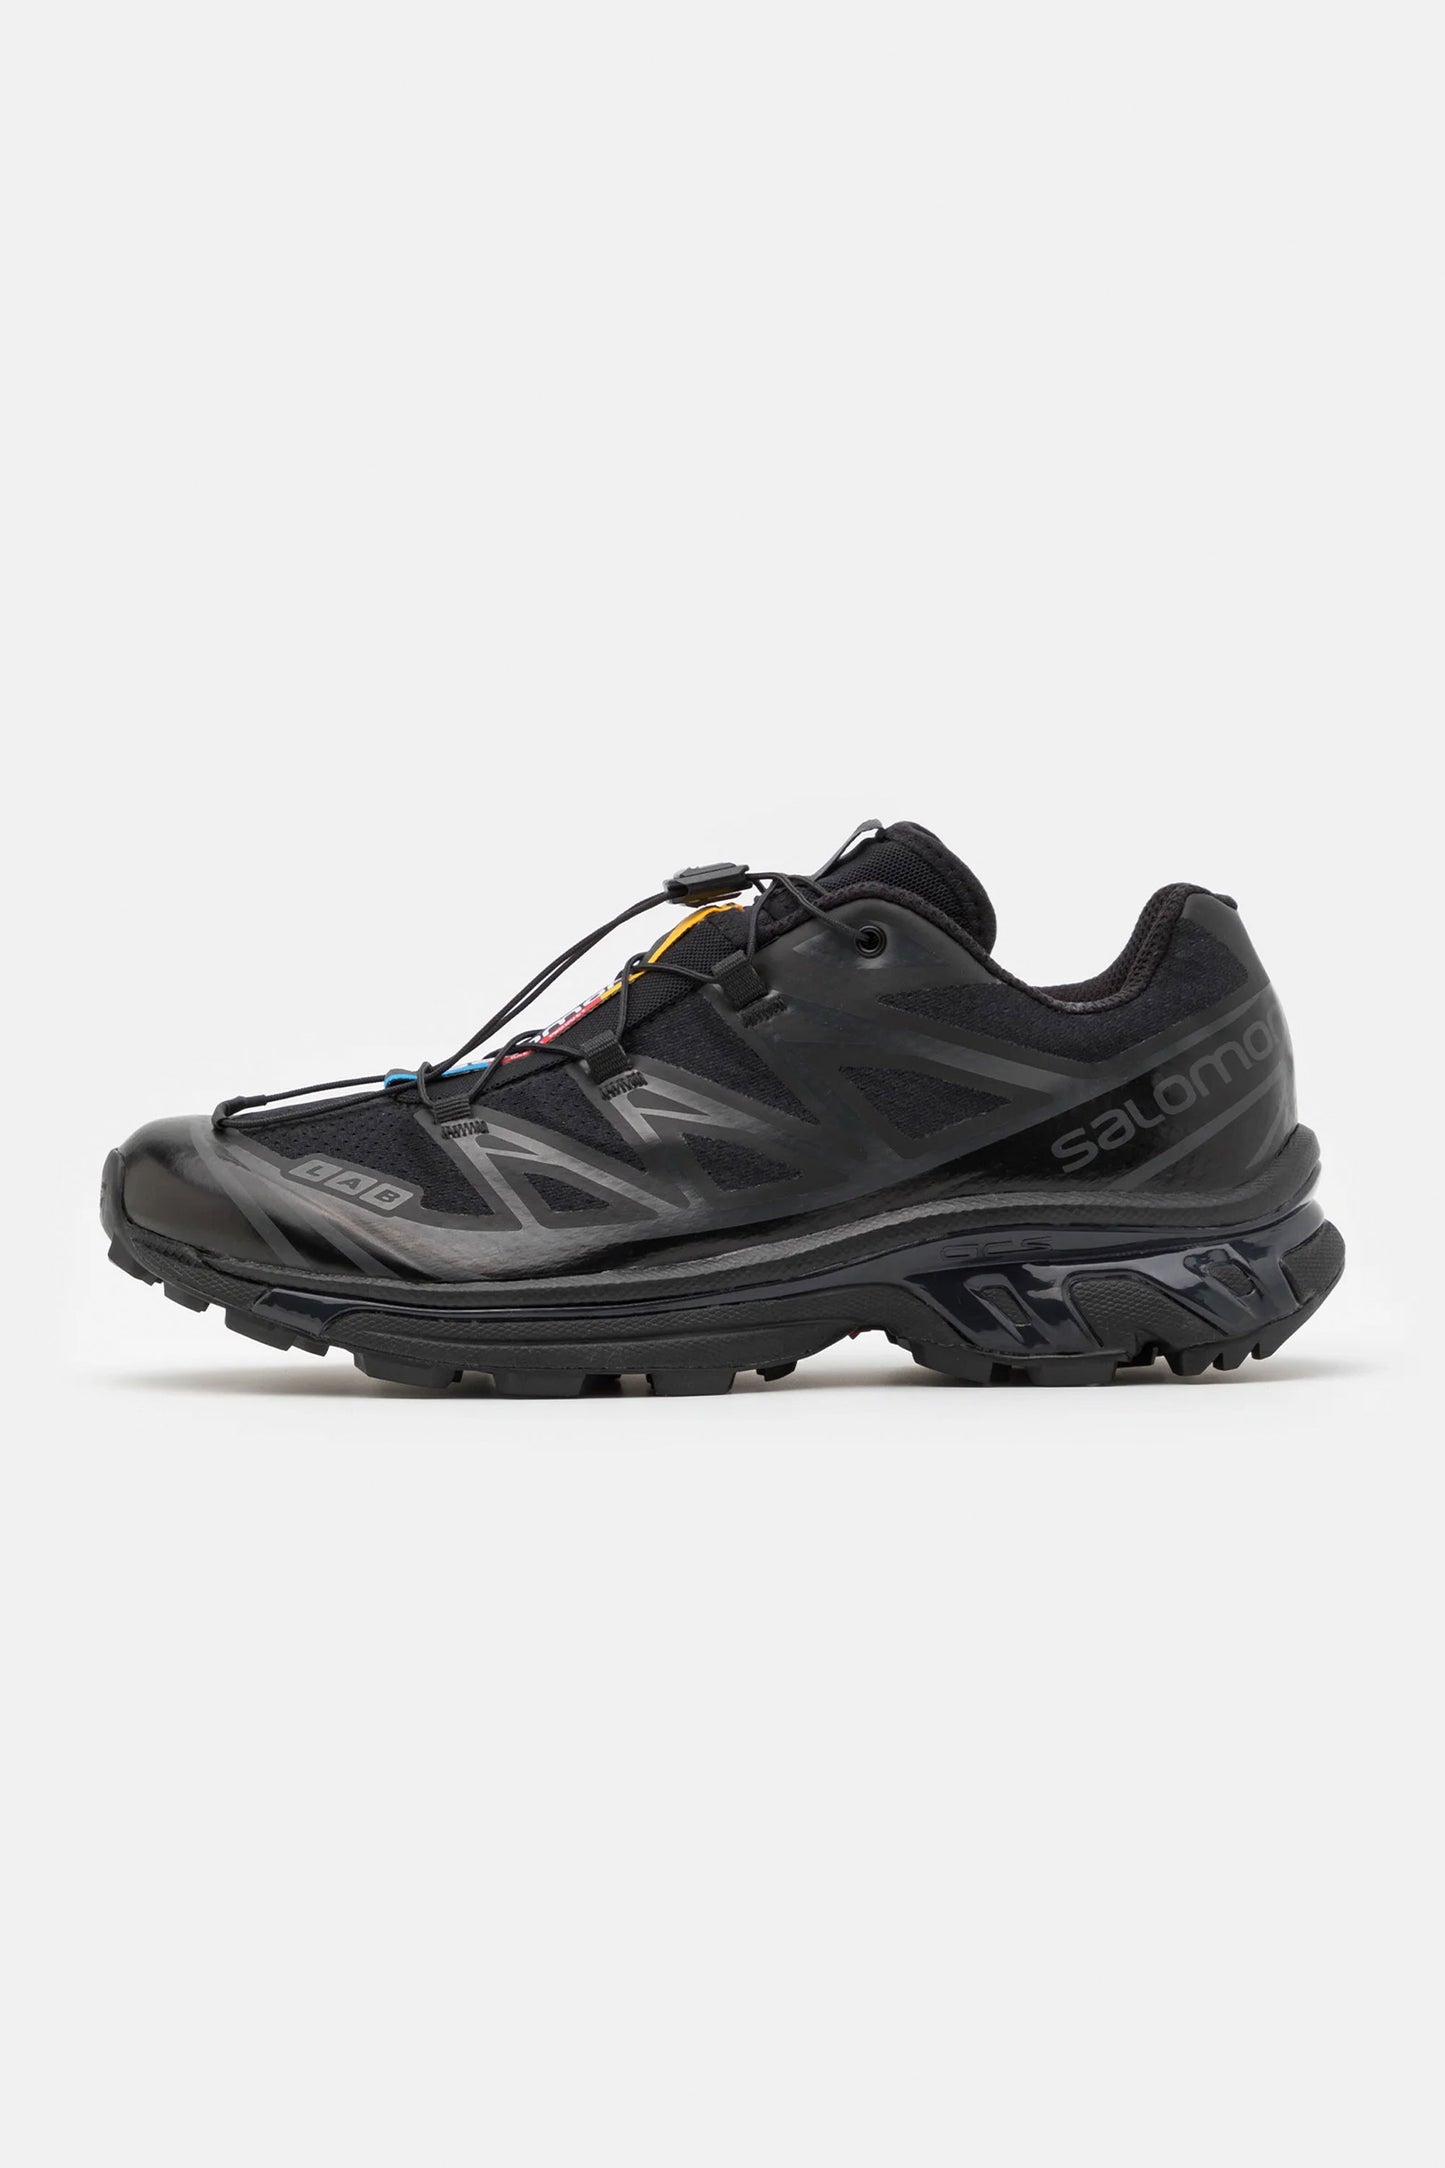 Pukas-Surf-Shop-salomon-footwear-man-xt-6-black